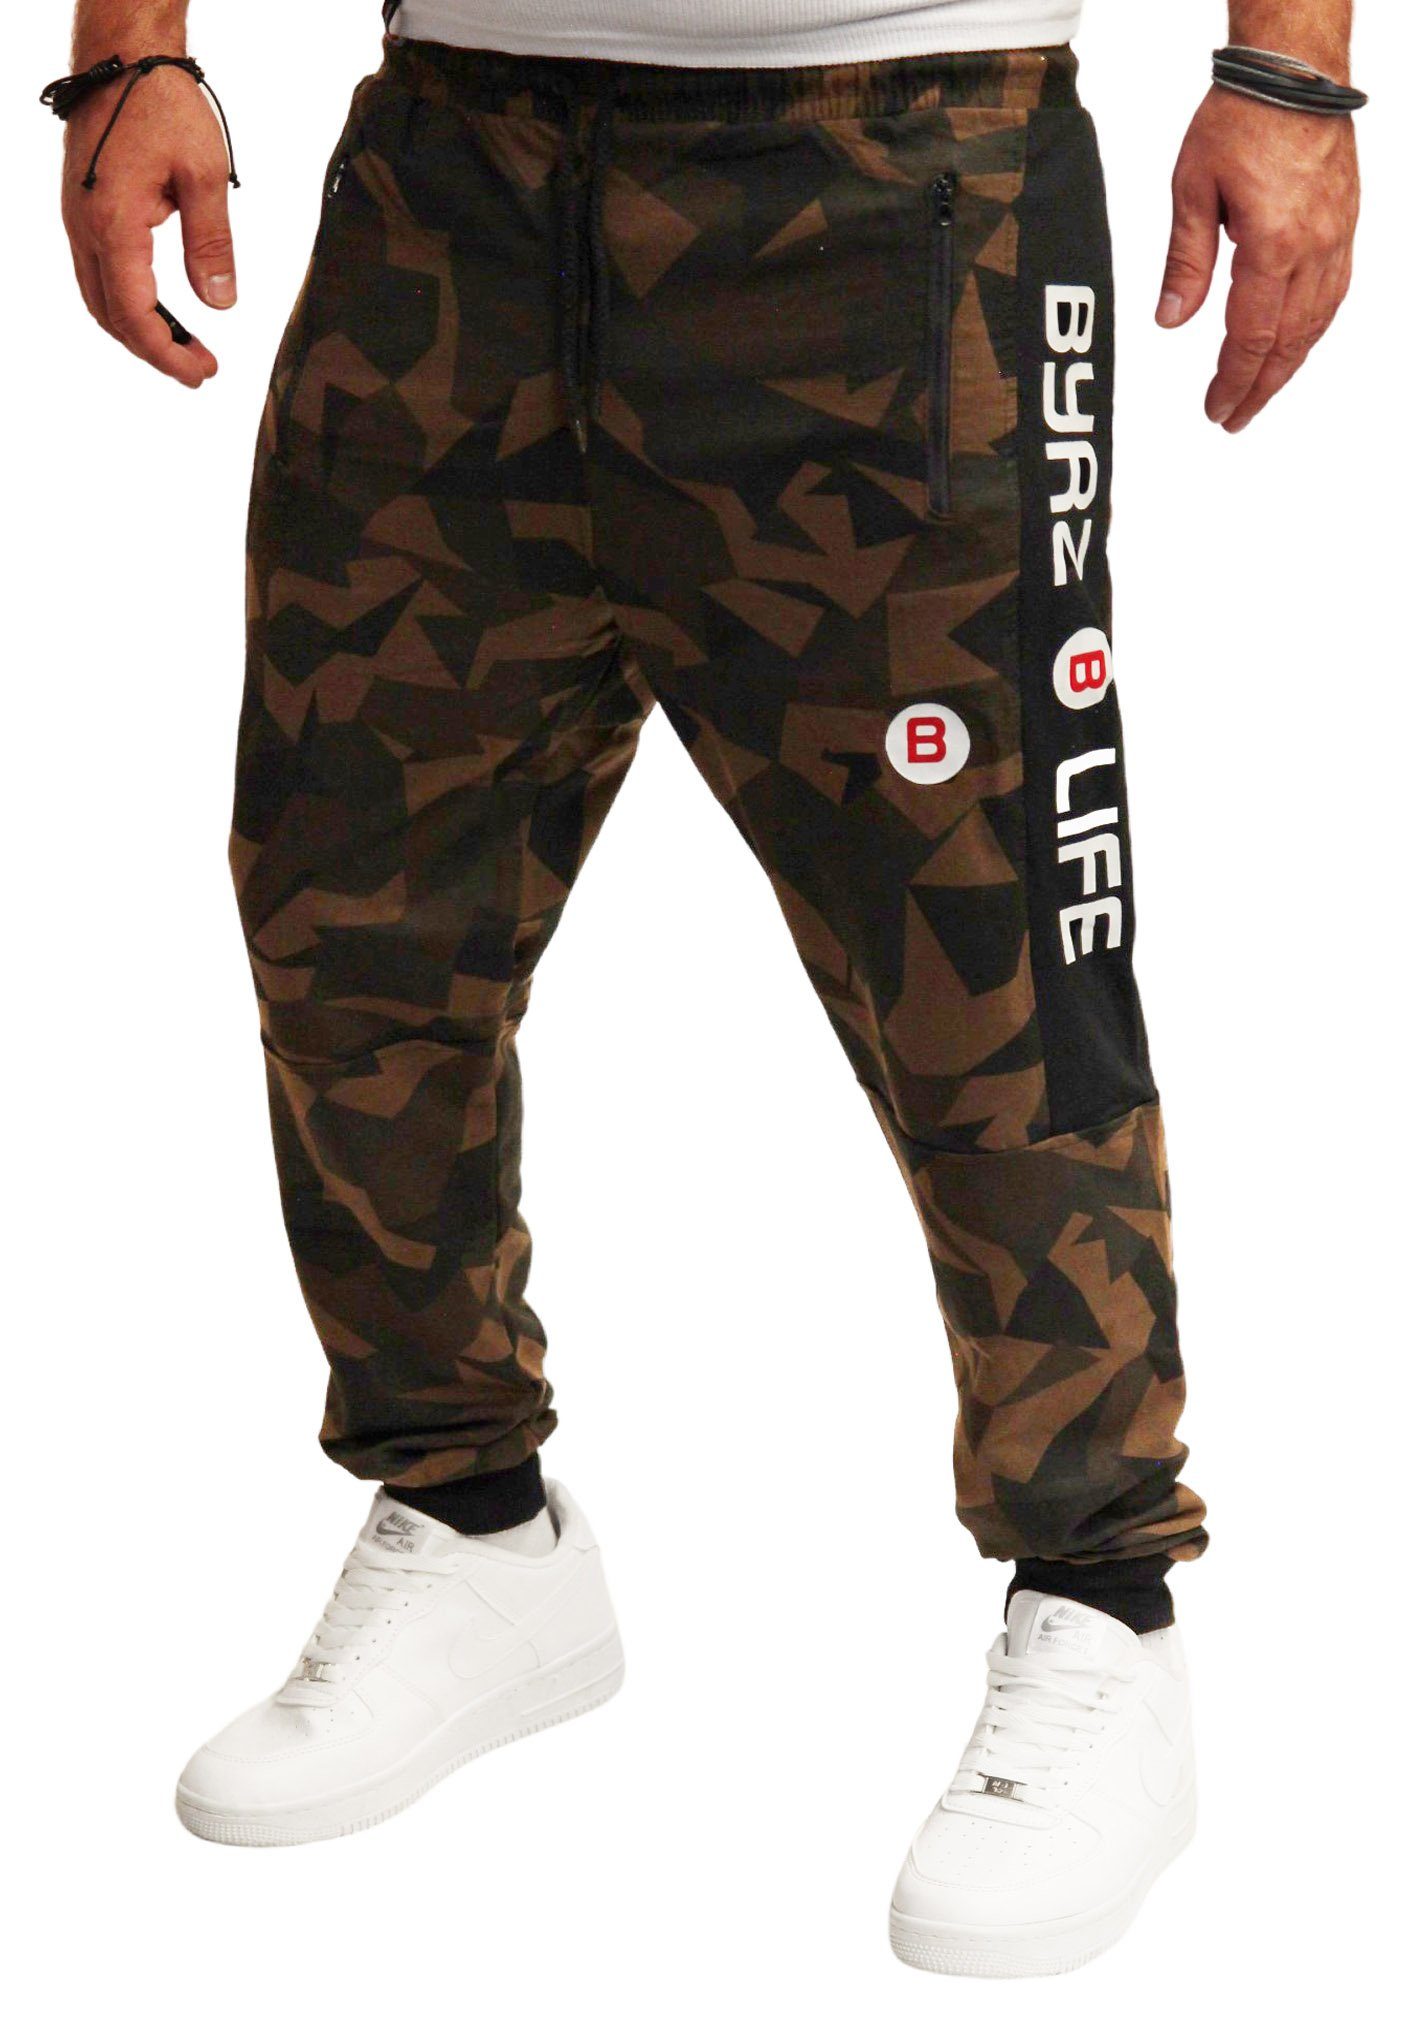 Army Trainingshose Camouflage Herren Hose Camouflage Sport RMK Fitnesshose Tarn (H.12) Jogginghose